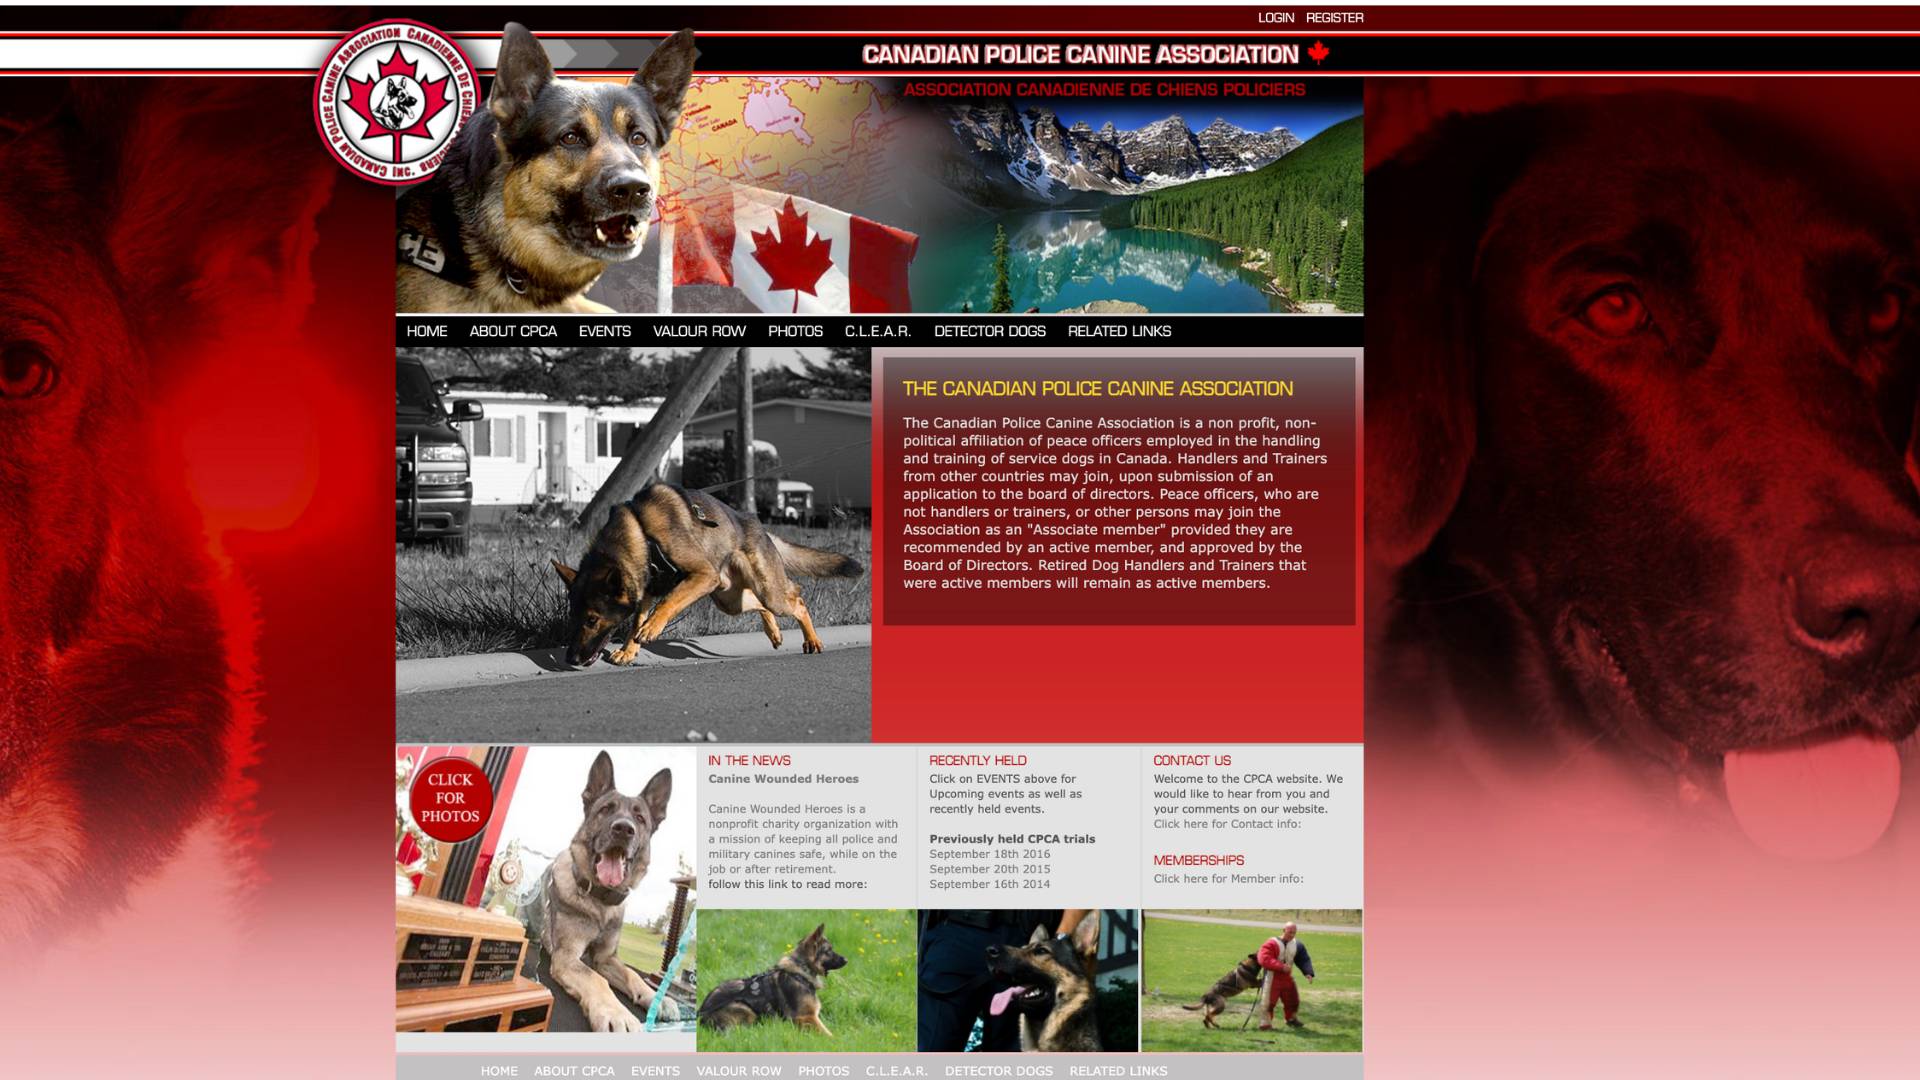 Canadian Police Association website  1920 x 1080.jpg